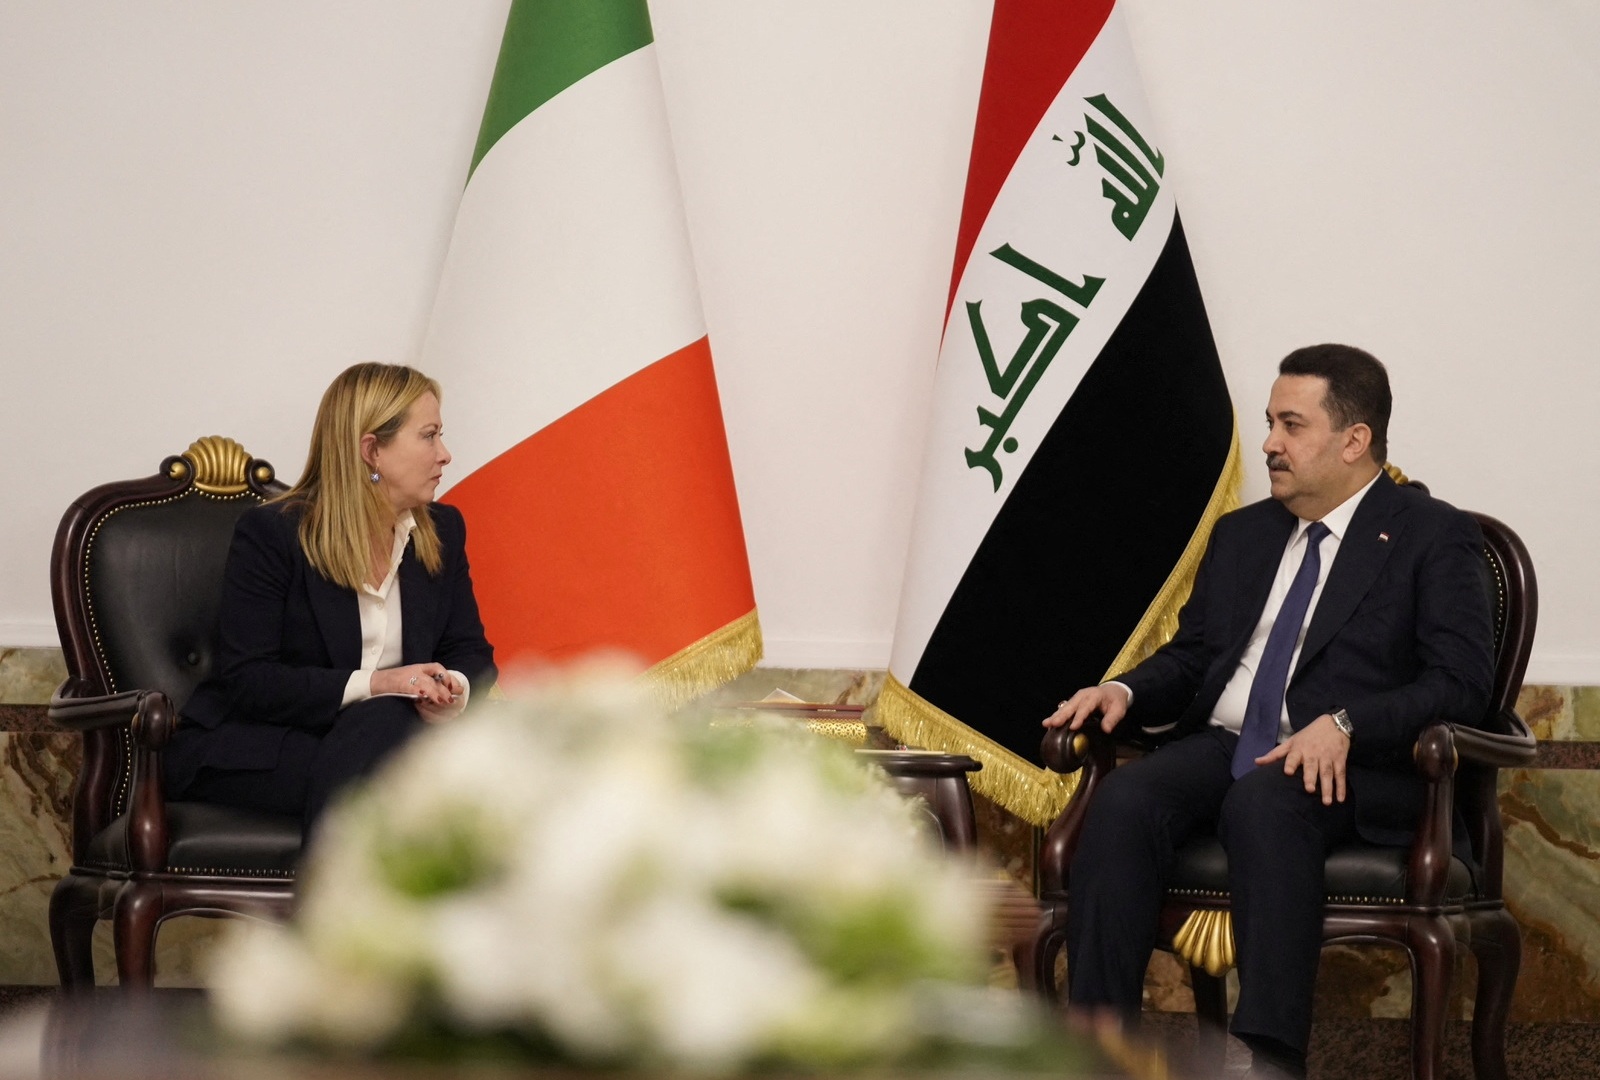 Economic ties head the agenda as Italy’s Meloni visits Iraq